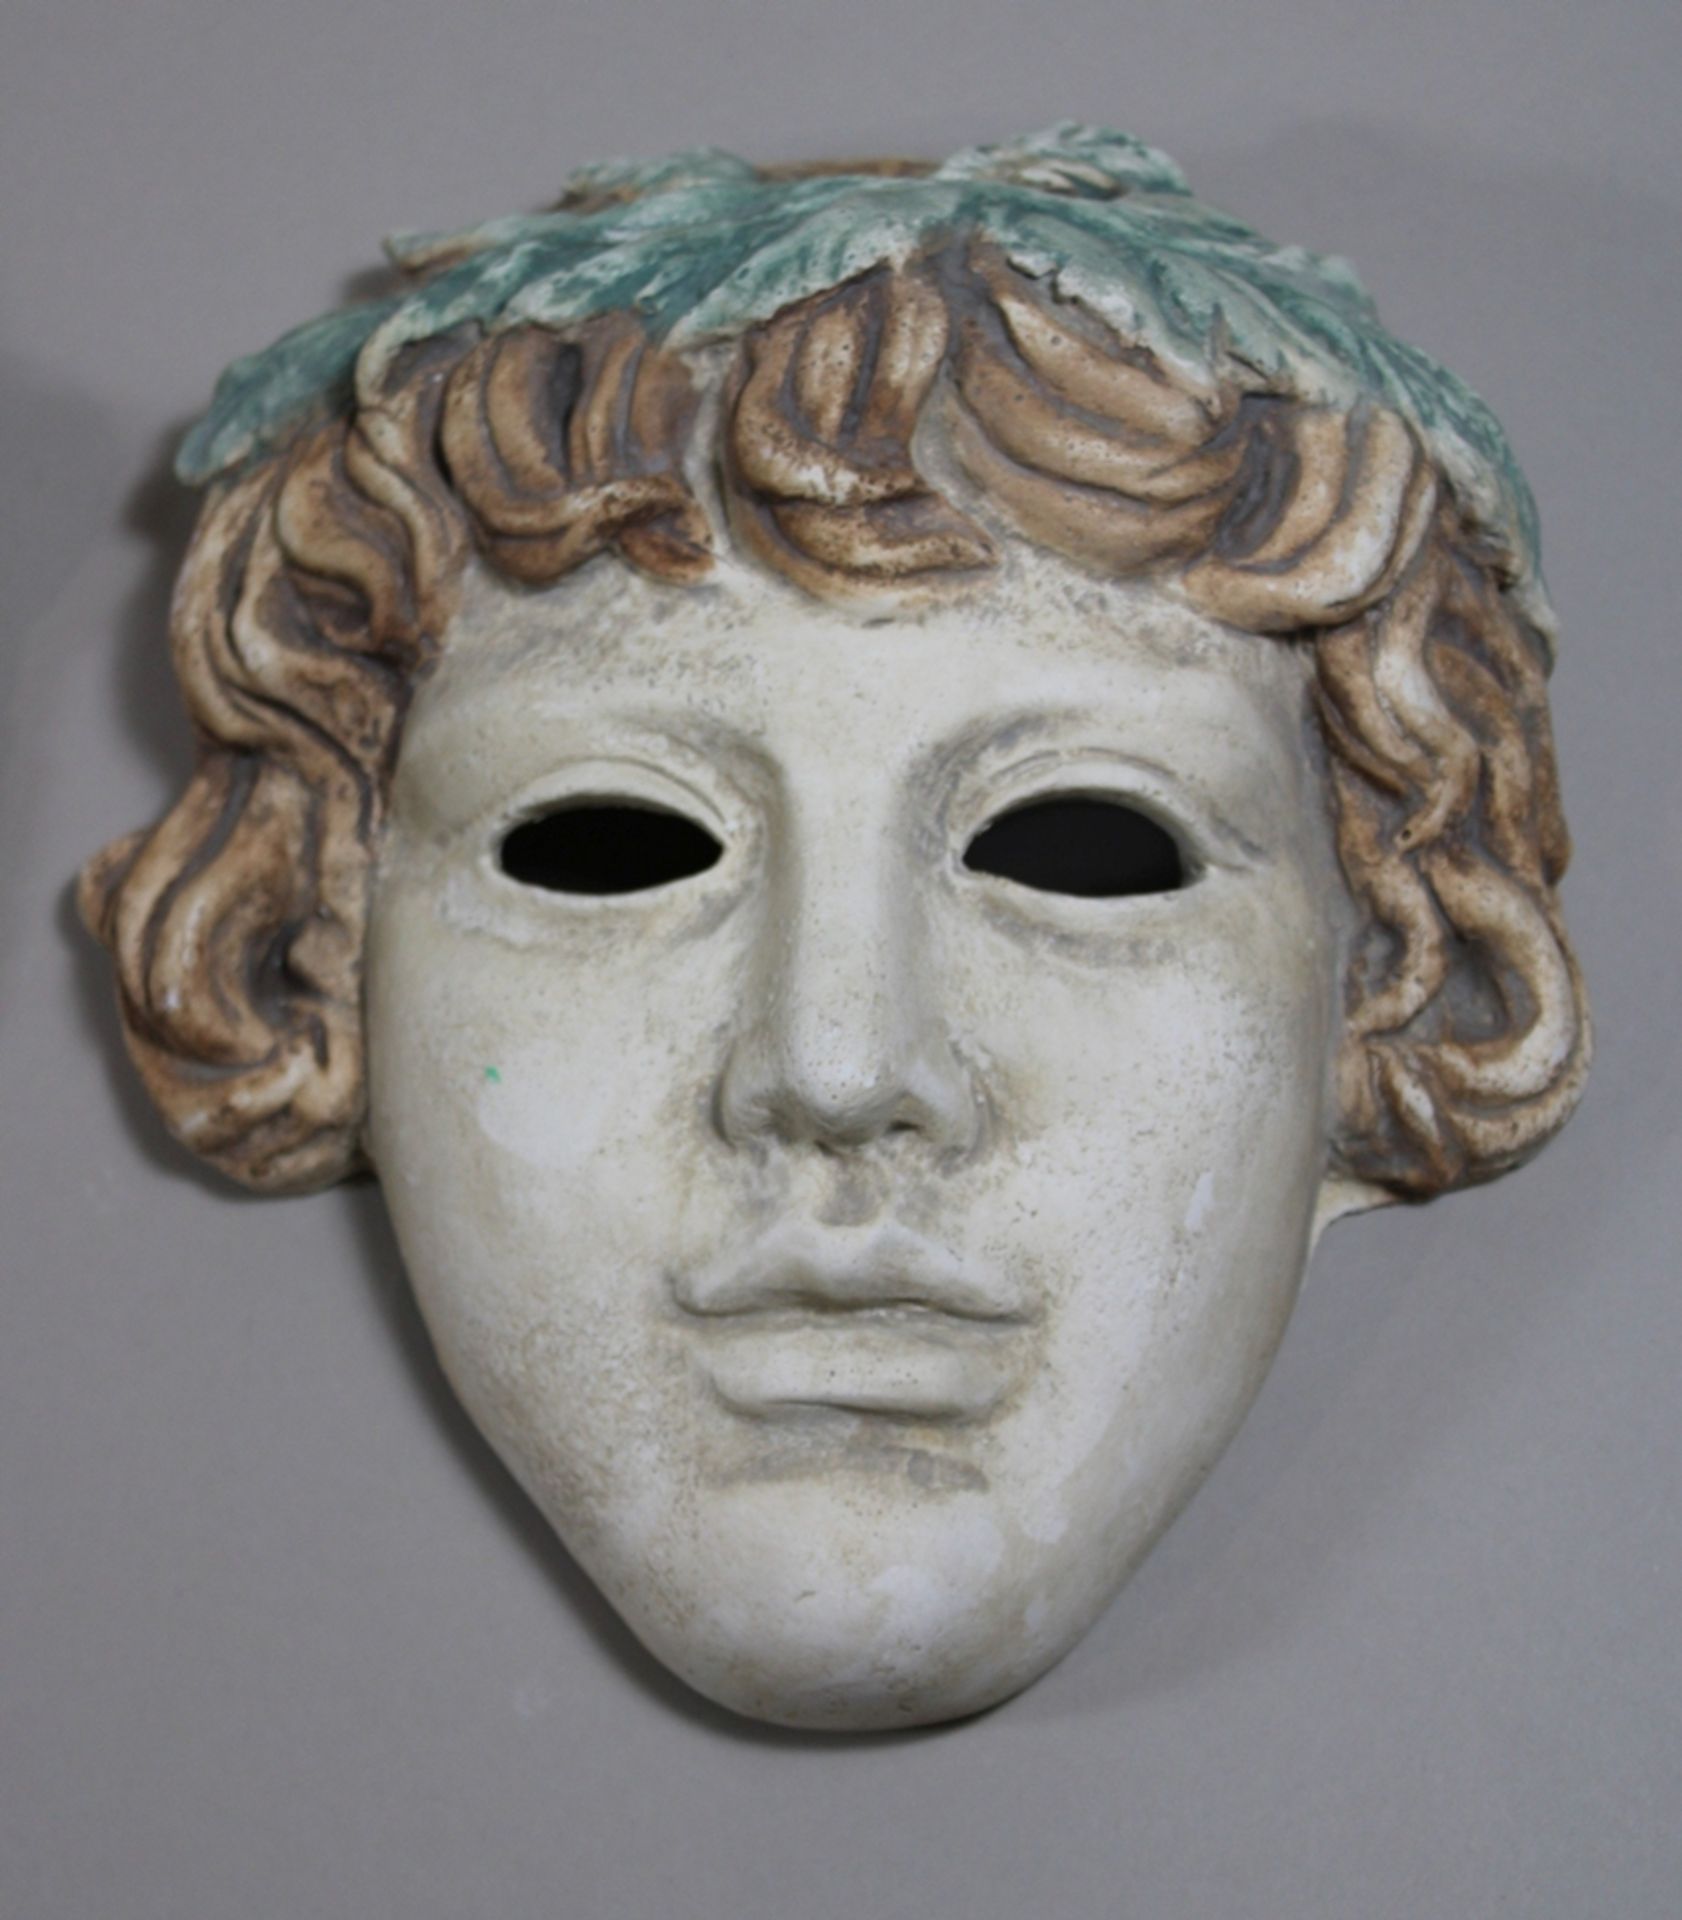 Griechische Theatermasken 4 Tl., Keramik, Griechenland, 20. Jh., H.: 27 cm. Guter, altersbedingter - Image 5 of 7